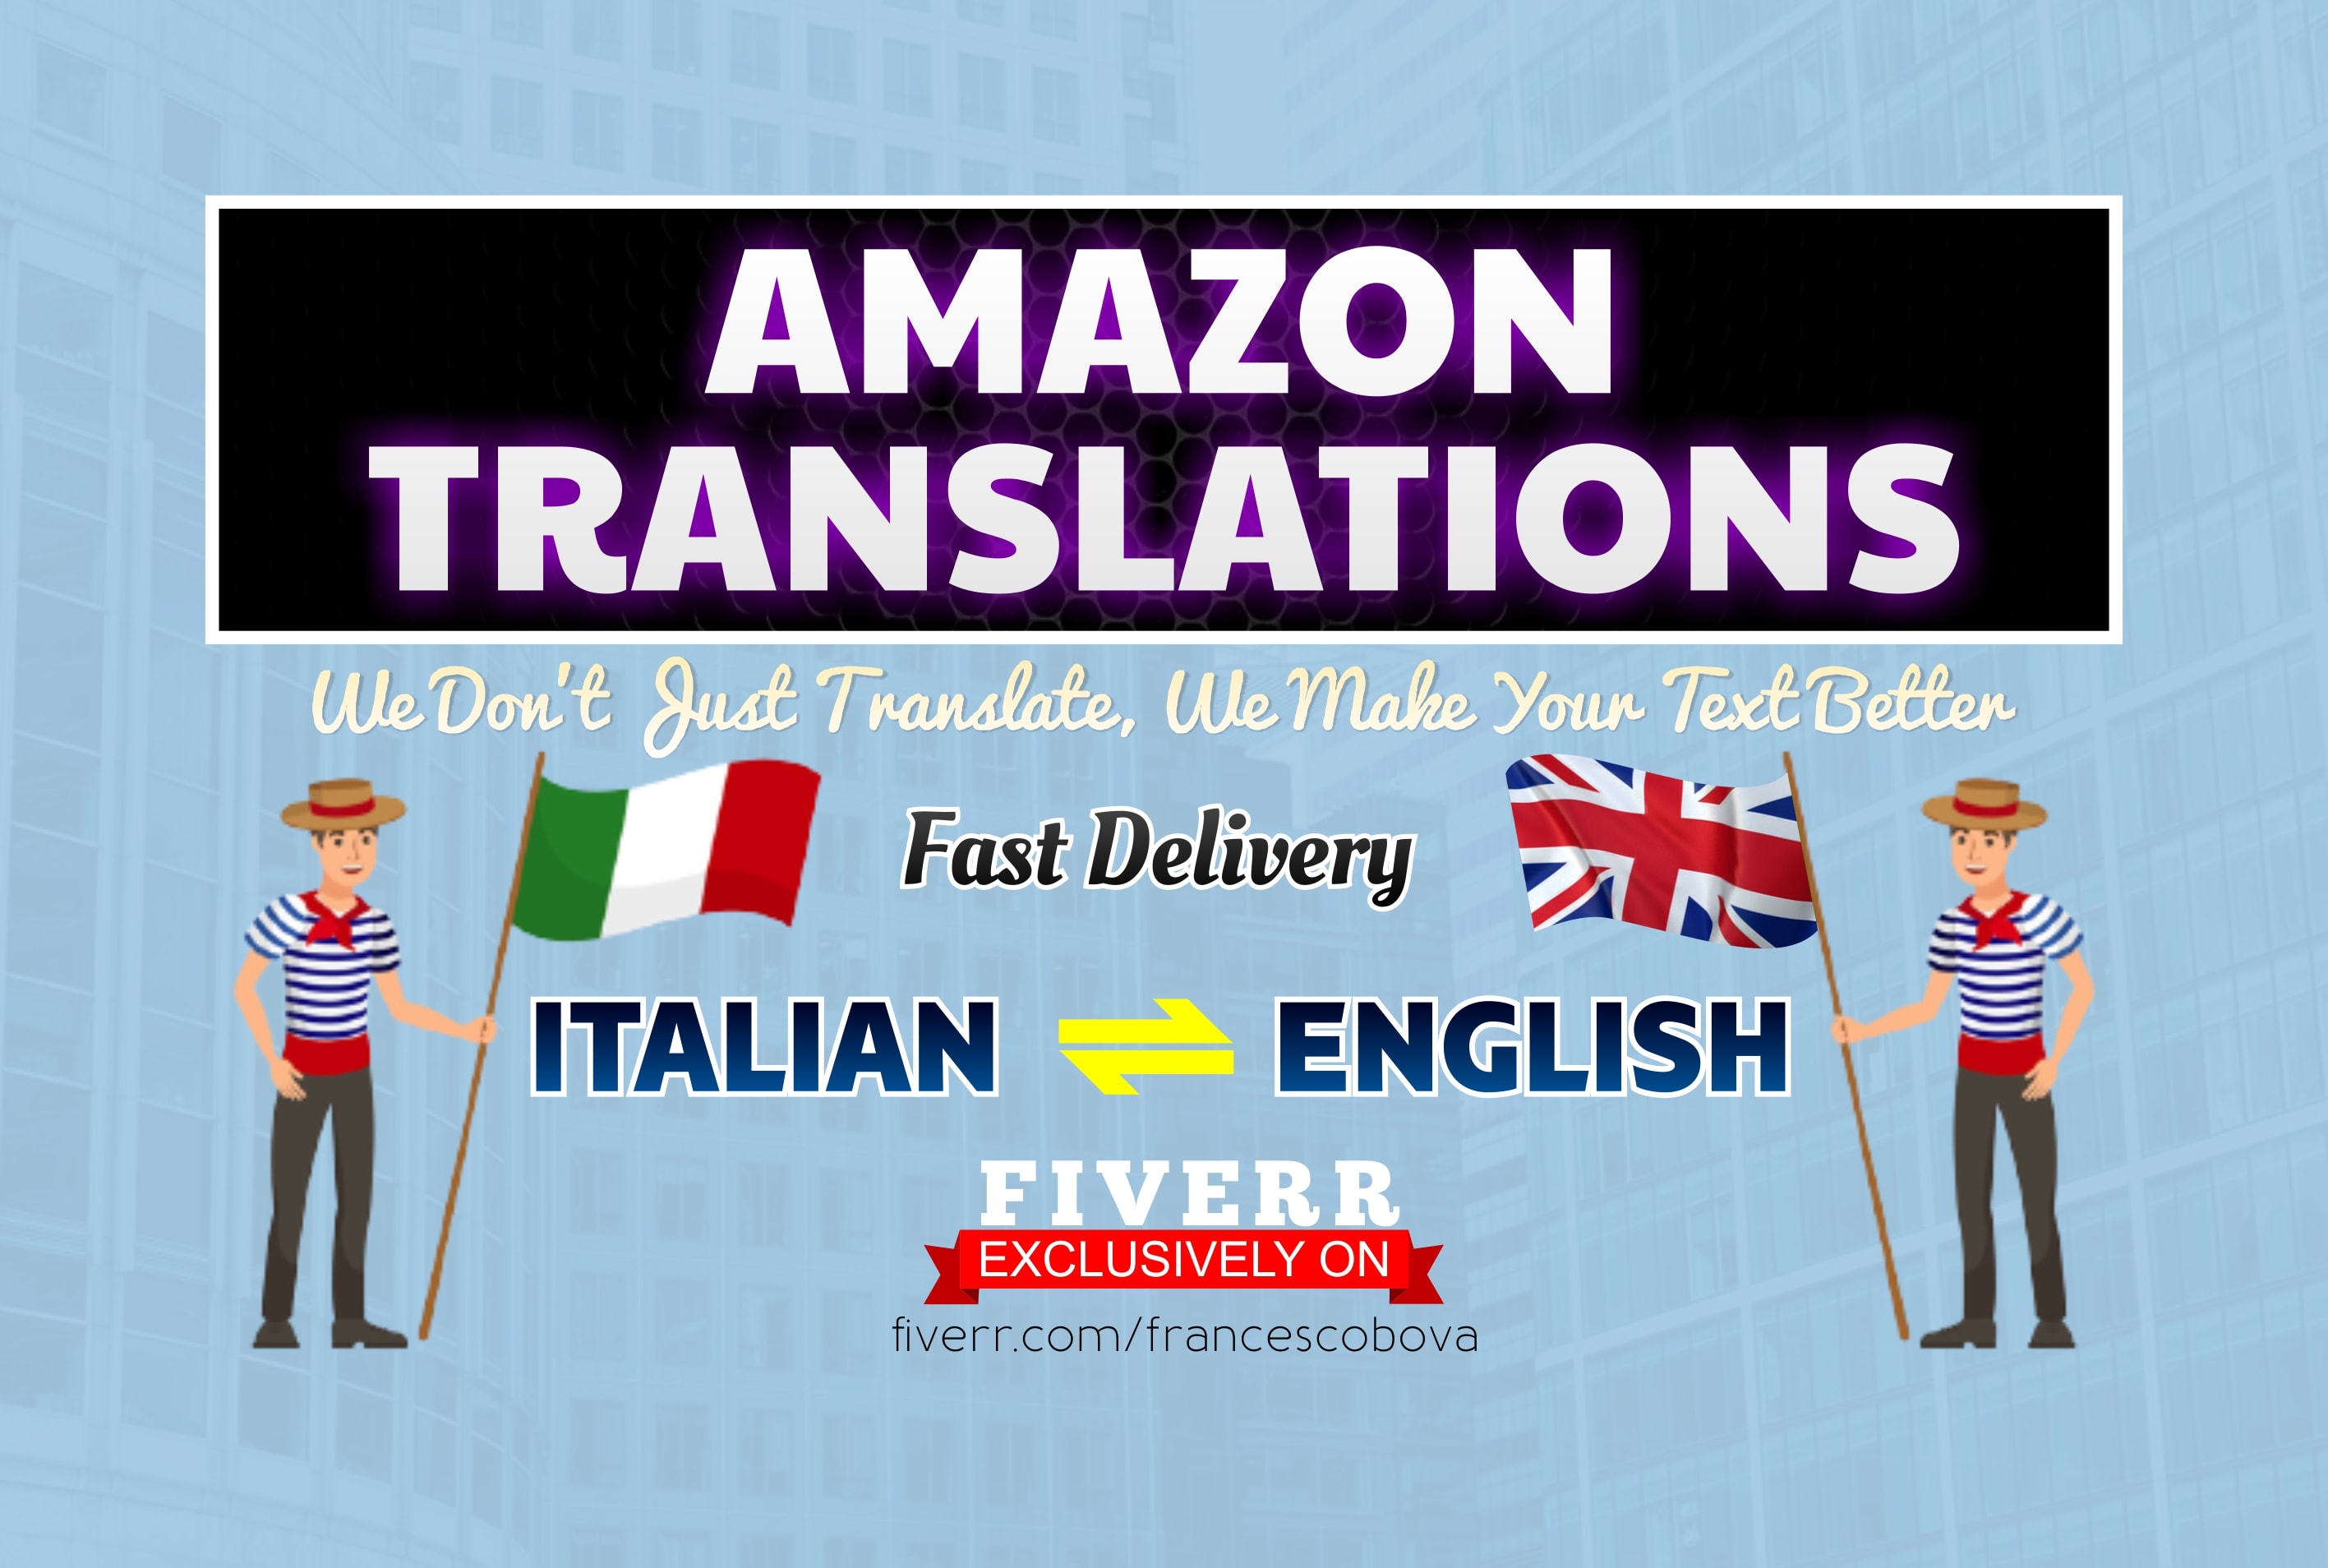 Nail translater Italian. Amazon перевод